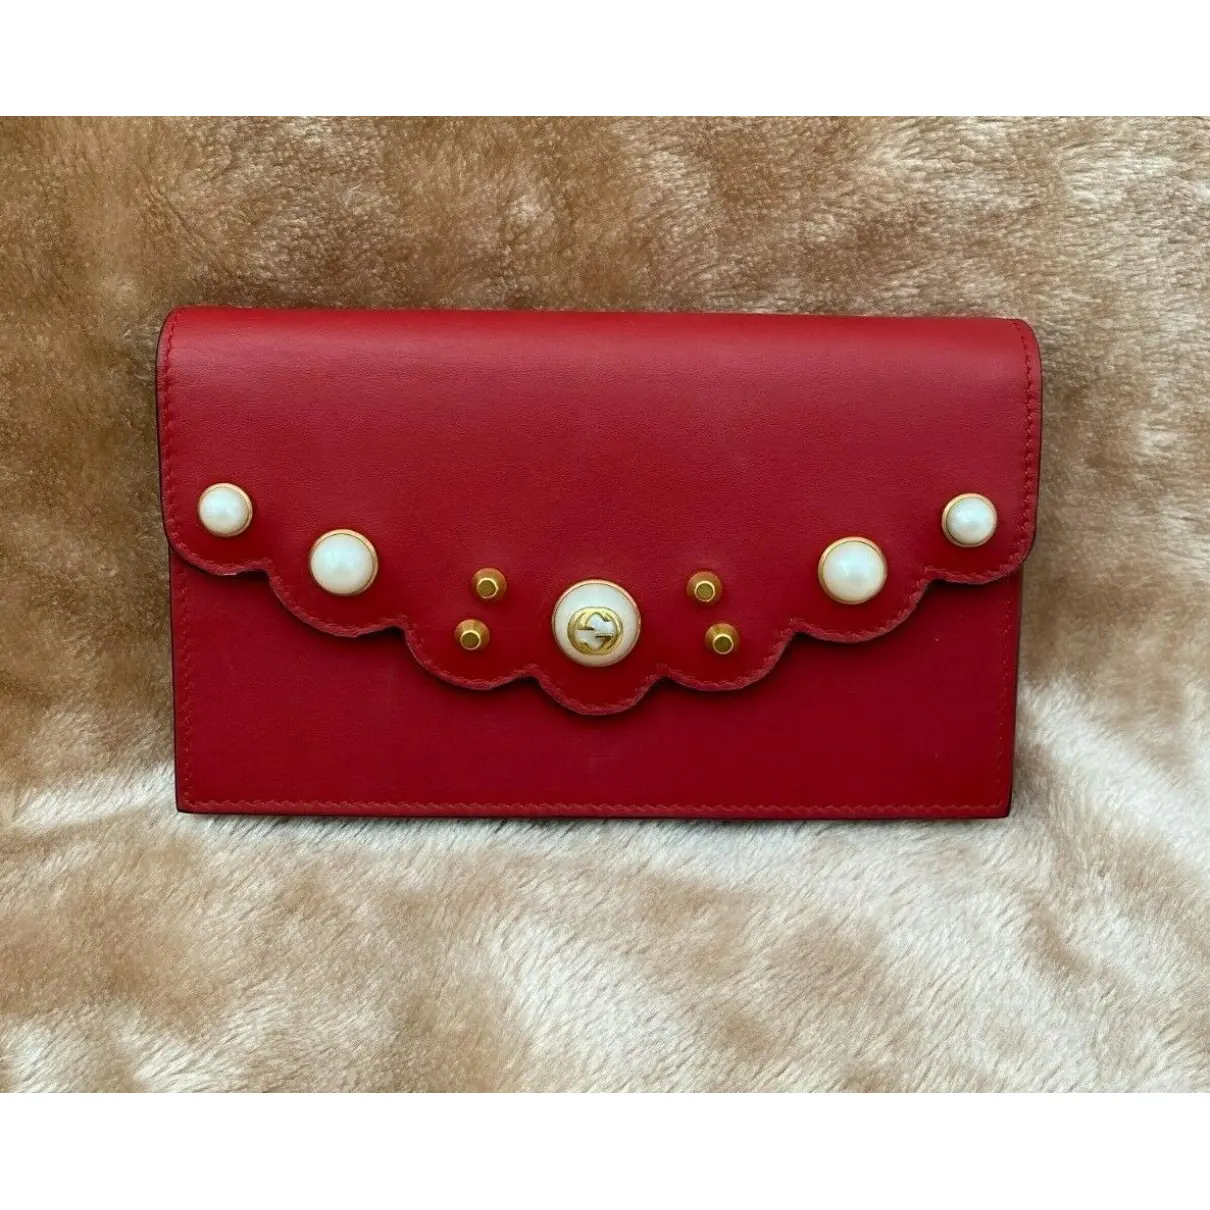 Buy Gucci Peony leather handbag online